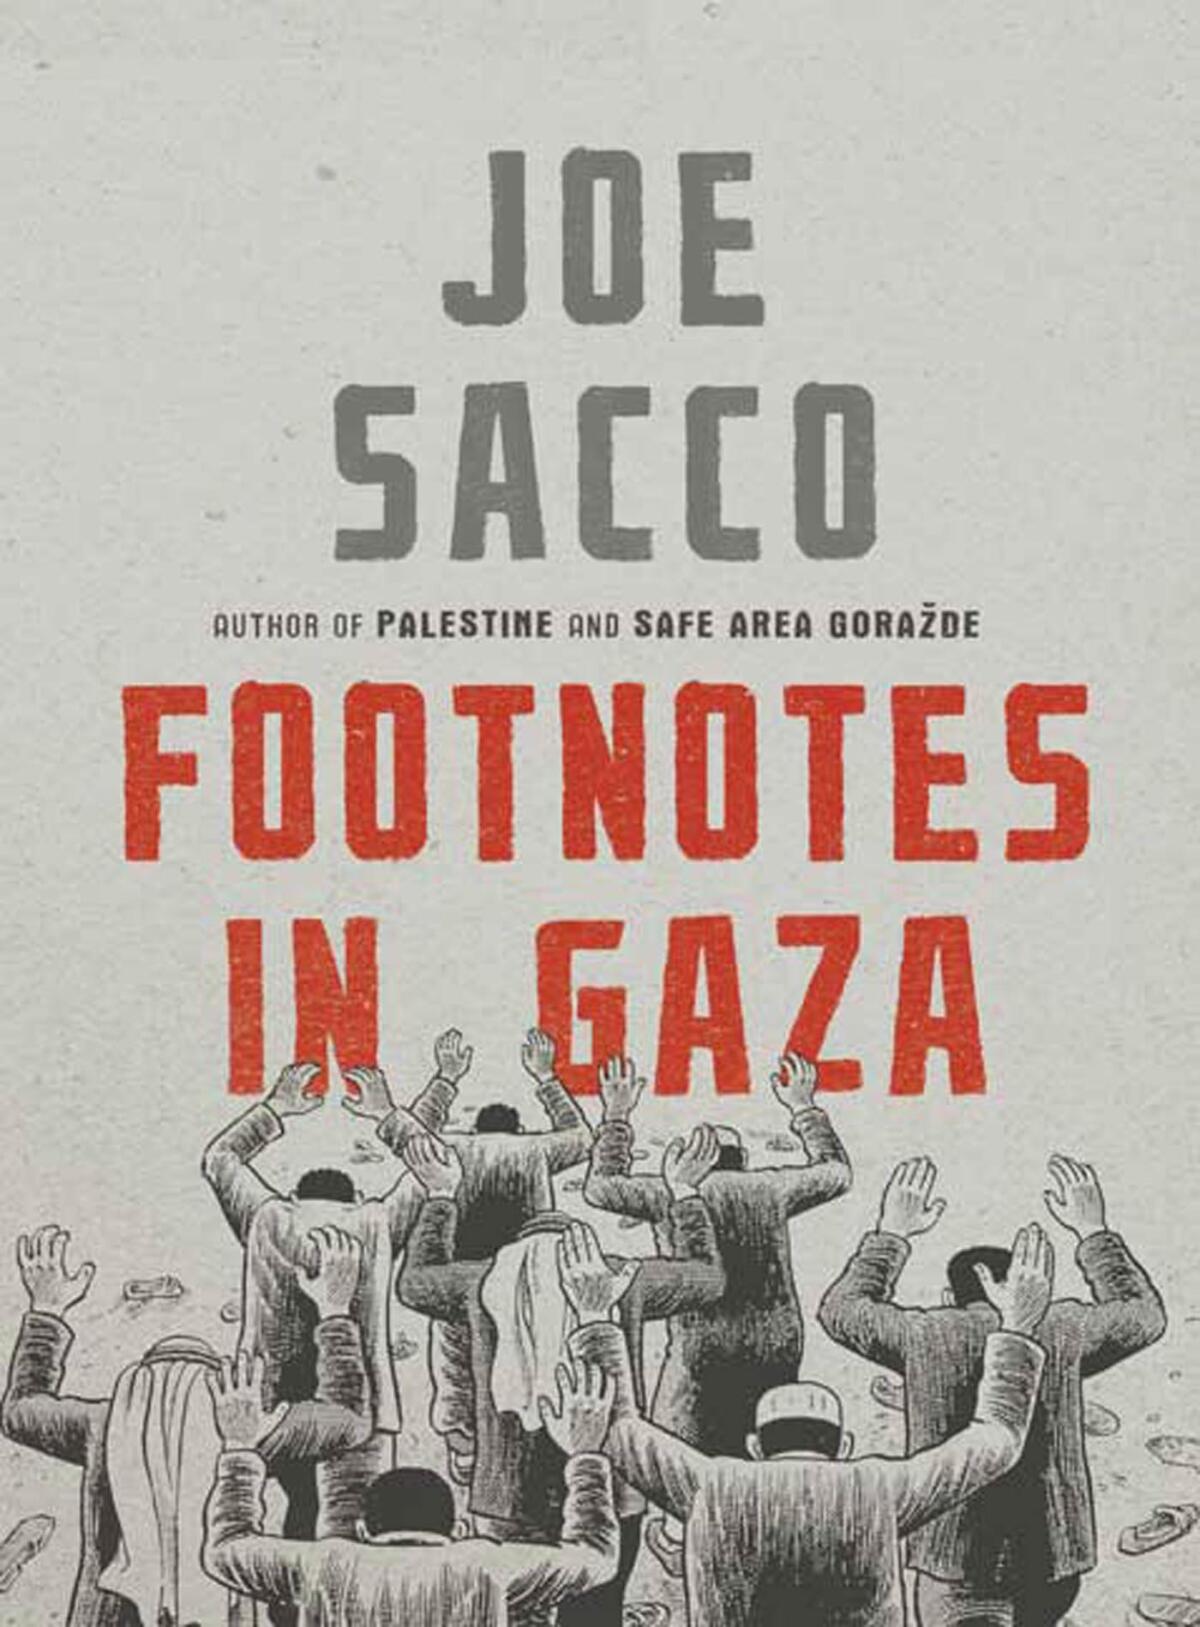 "Footnotes in Gaza," by Joe Sacco